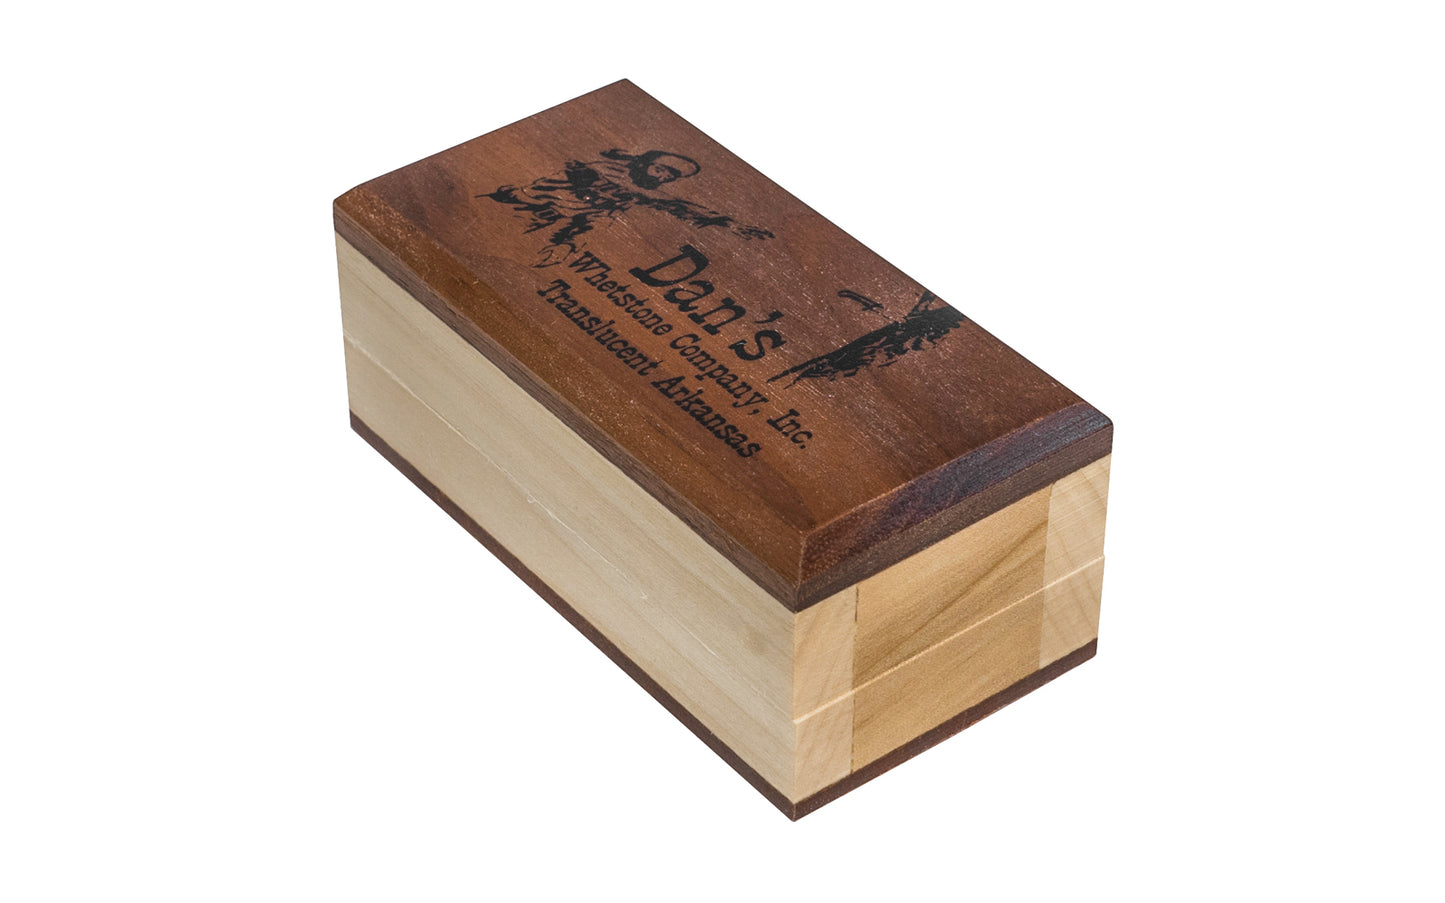 Translucent Arkansas 4-Piece Slip Stone Set with Wooden Box - Model No. TASSET ~ Made in USA ~ True Hard Arkansas - Translucent Stone Set - Wood Box